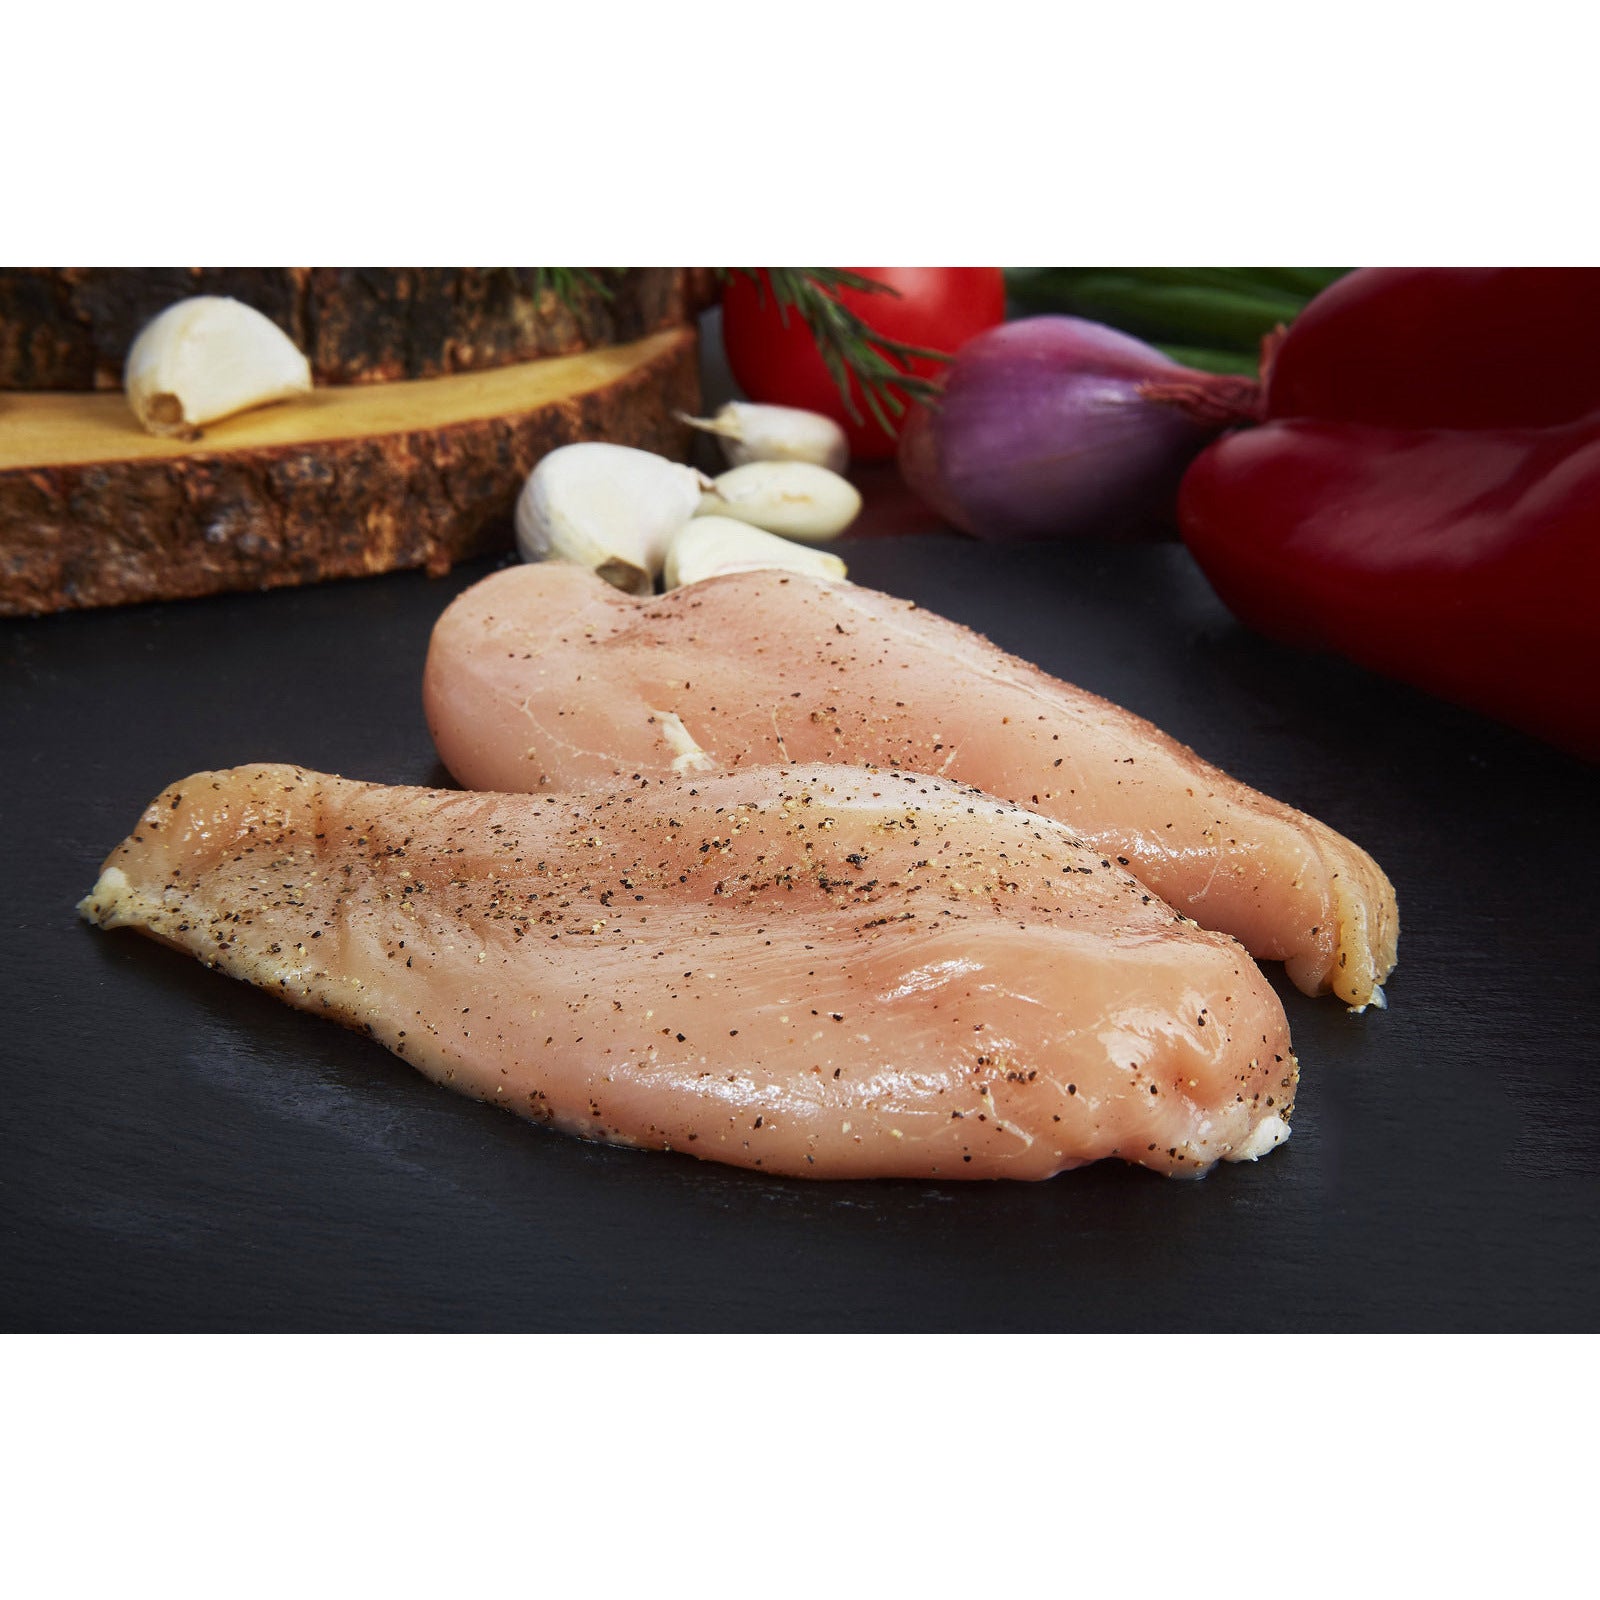 Chicken Breast 7oz. with Garlic Seasonings Single Lobe - Individually Frozen